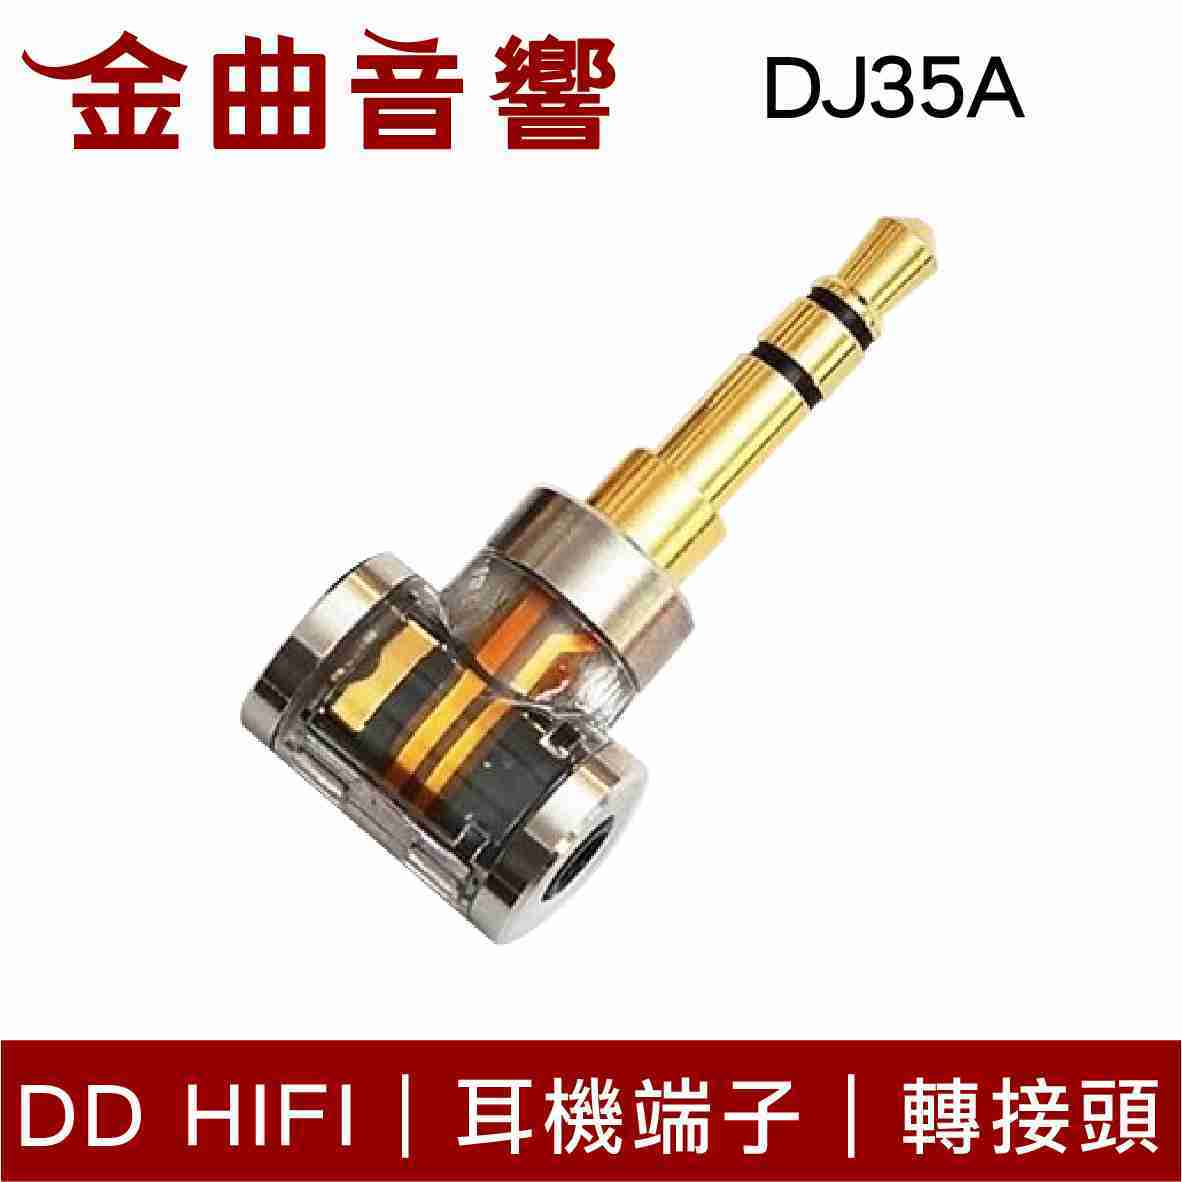 DD Hifi DJ35A 耳機端子 轉接頭 適用2.5mm平衡接頭 | 金曲音響